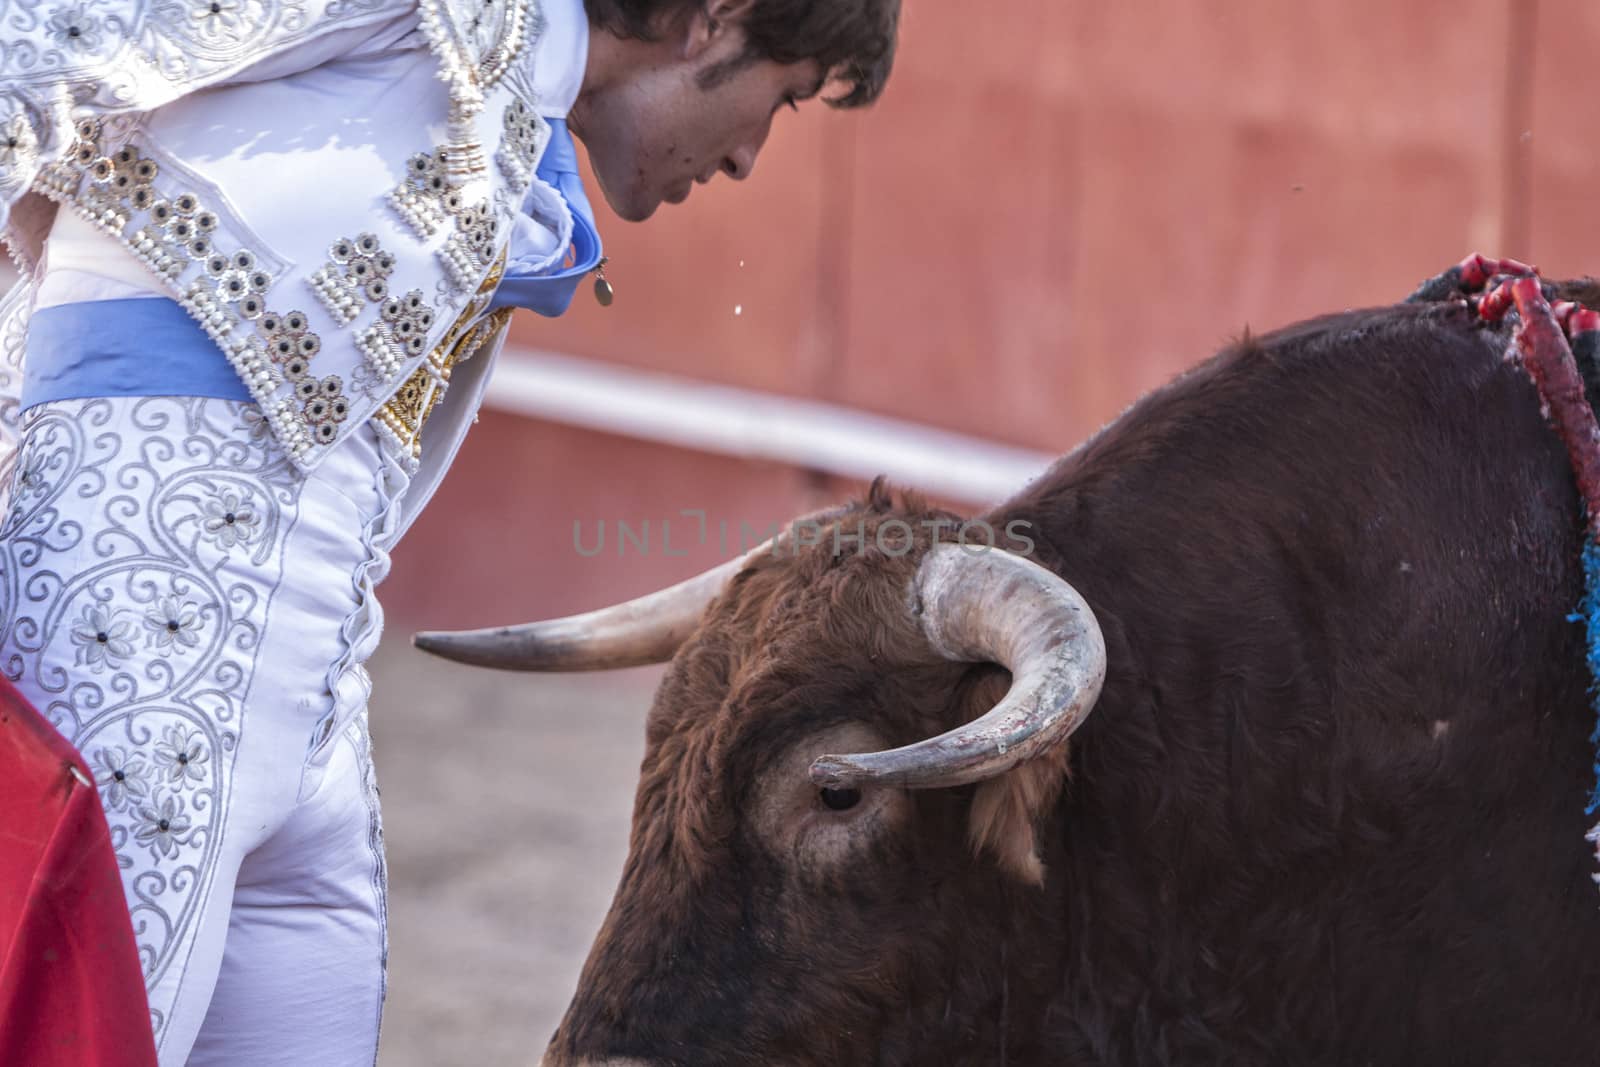 Beas de Segura, Jaen province, SPAIN - 11 october 2009: Bullfighter Alberto Lamelas bullfighting bringing your body between the horns of the bull in an act of courage in the Bullring of Beas de segura,  Jaen province, Andalusia, Spain